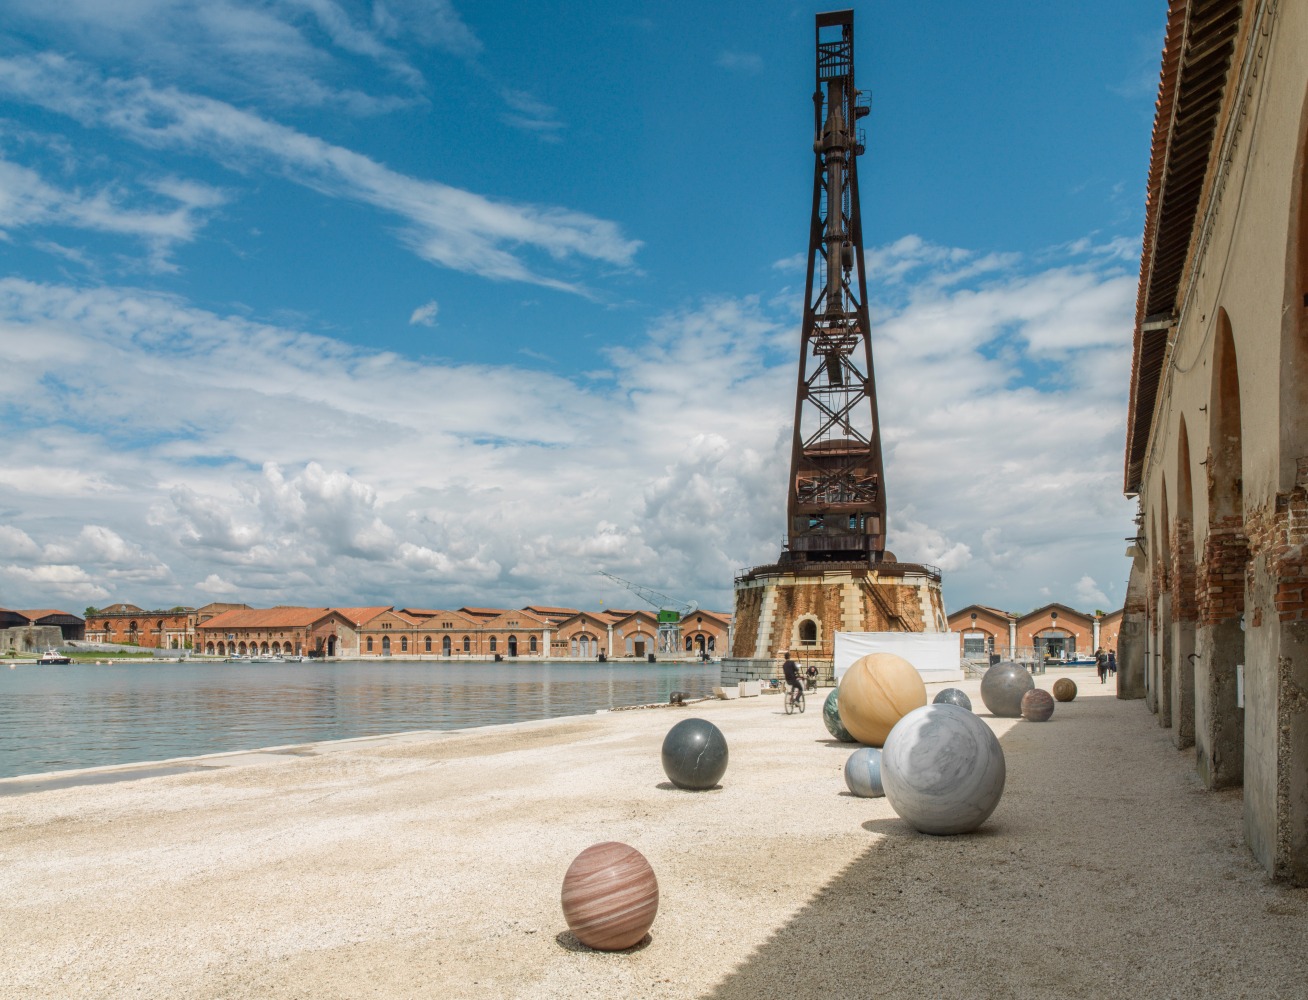 Alicja Kwade,&amp;nbsp;Pars pro Toto,&amp;nbsp;2017

Stone, sound

Installation view: Venice Biennale 2017

Photo:&amp;nbsp;Roman M&amp;auml;rz

&amp;nbsp;

